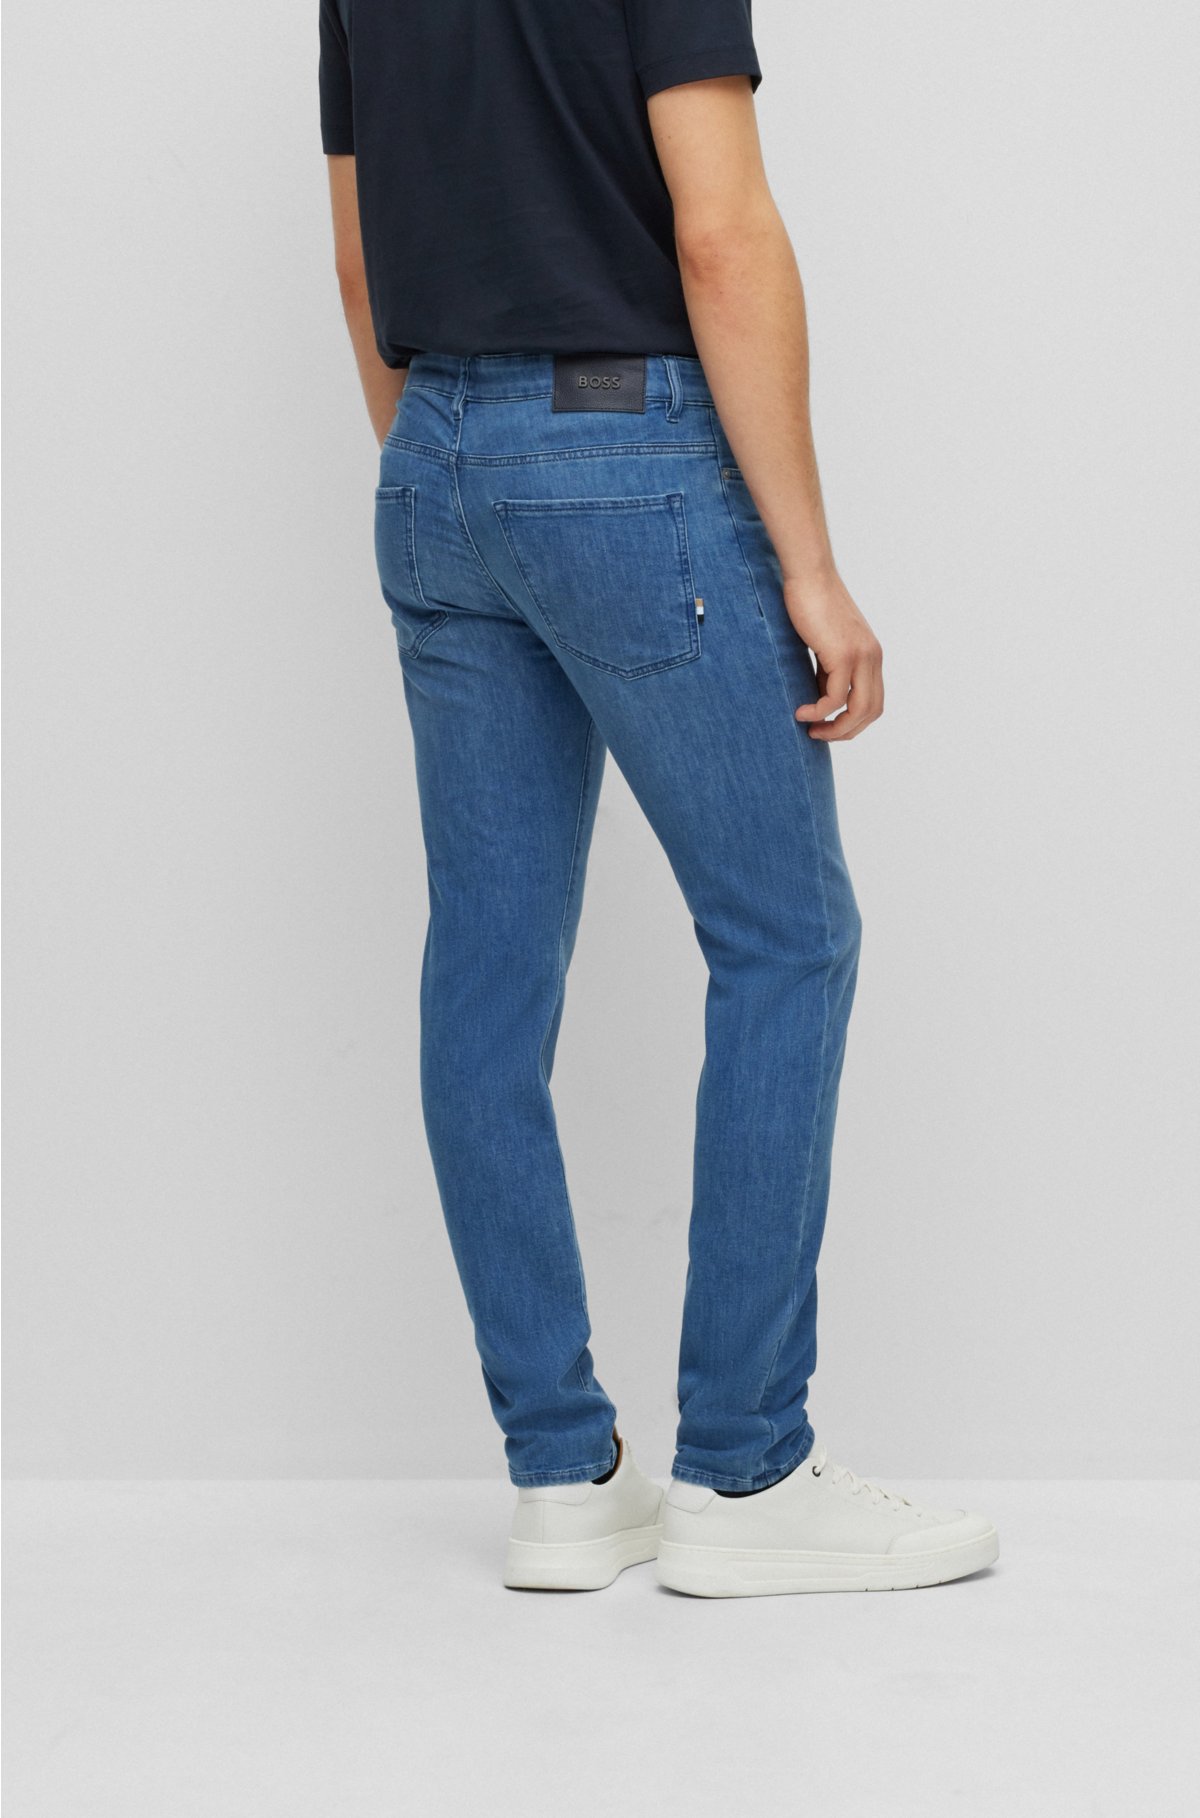 Brianna Cobalt Blue High-Waisted Tummy Control Skinny Jeans - Reg